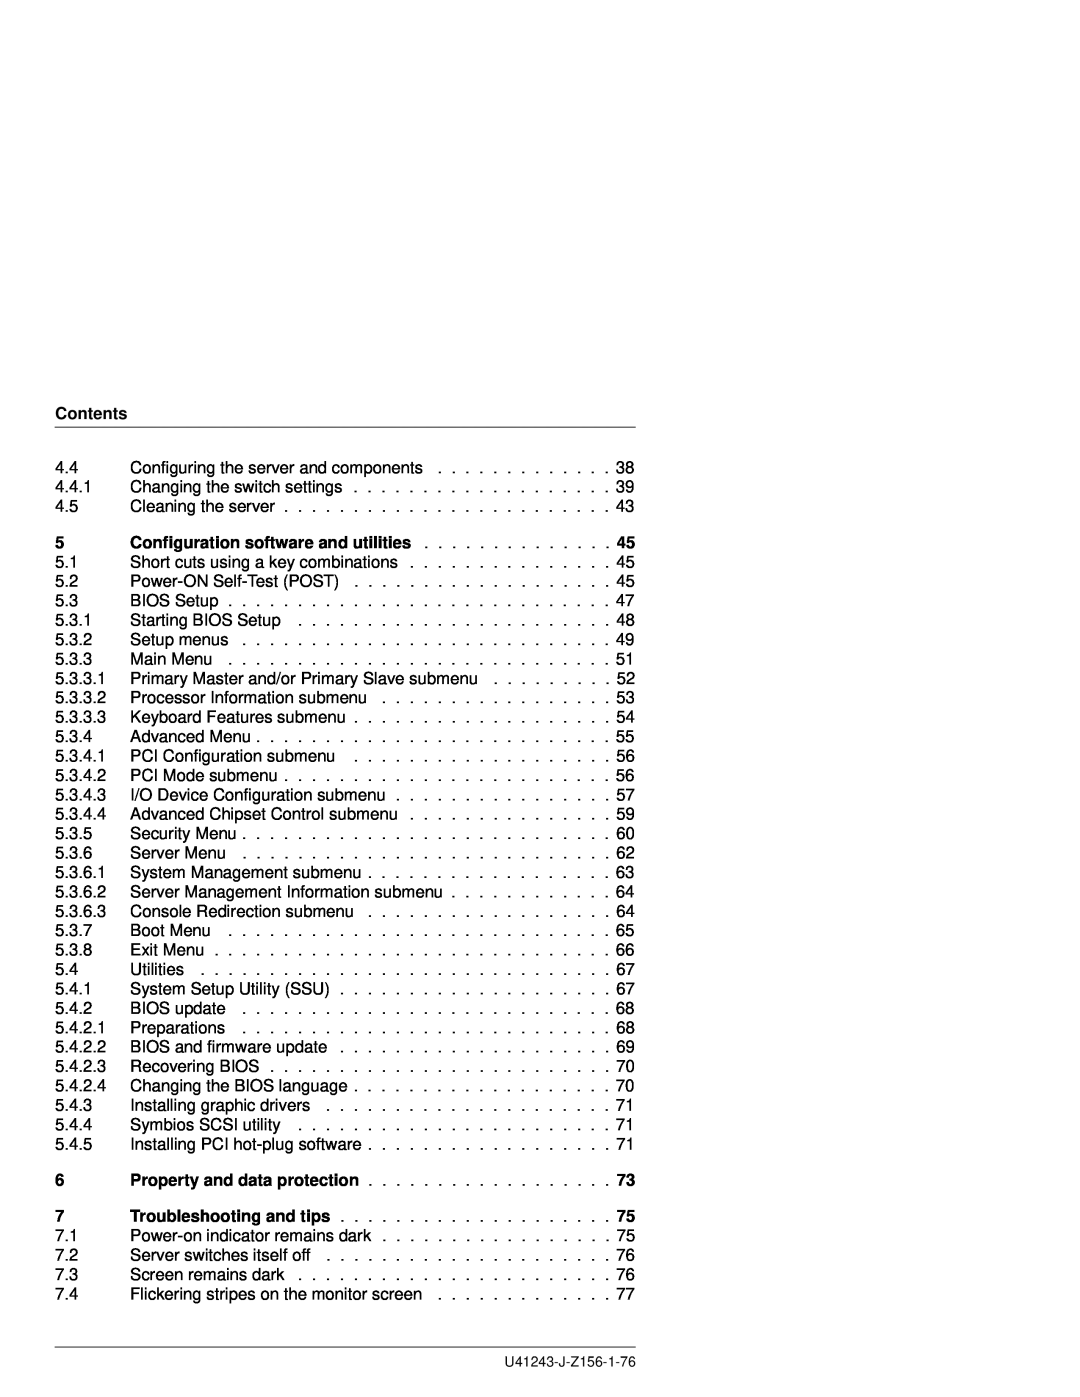 Fujitsu N800 manual Contents, Configuration software and utilities 